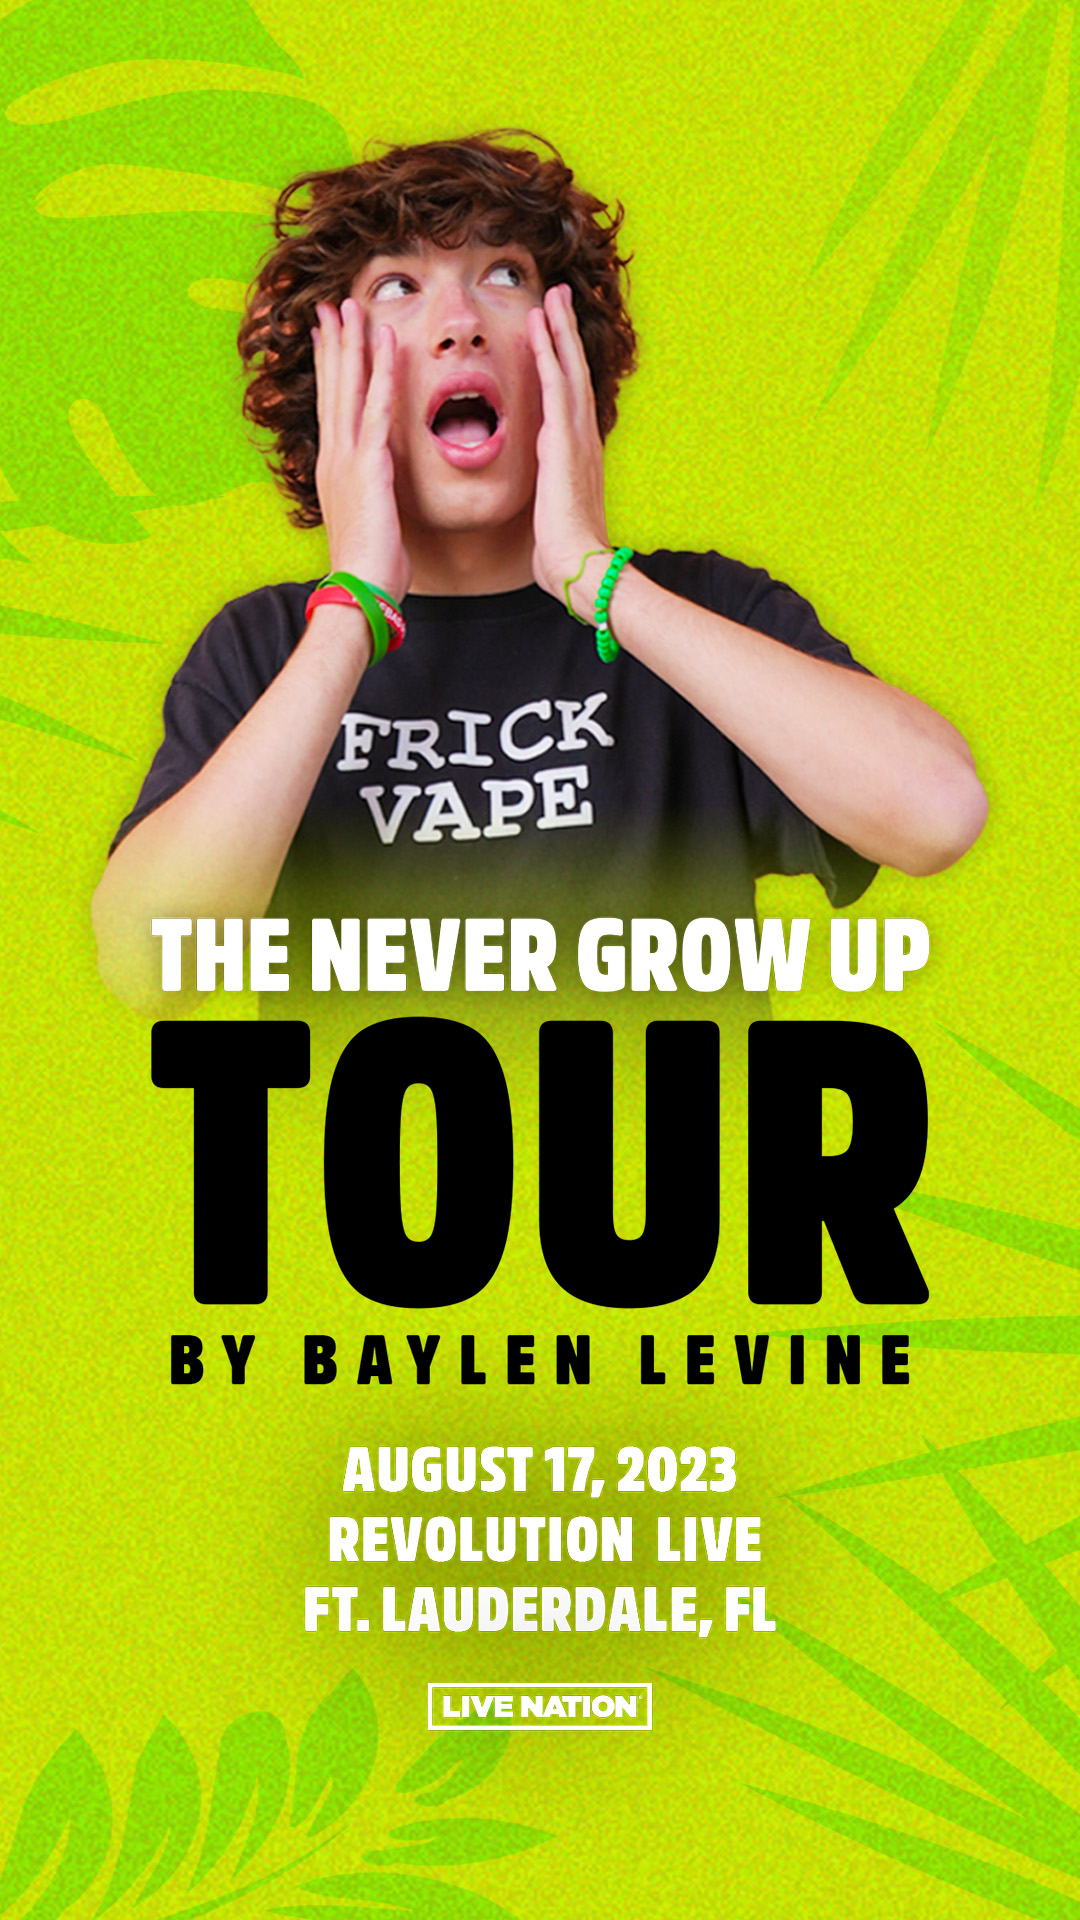 Baylen Levine Tickets Fort Lauderdale 2023 Story